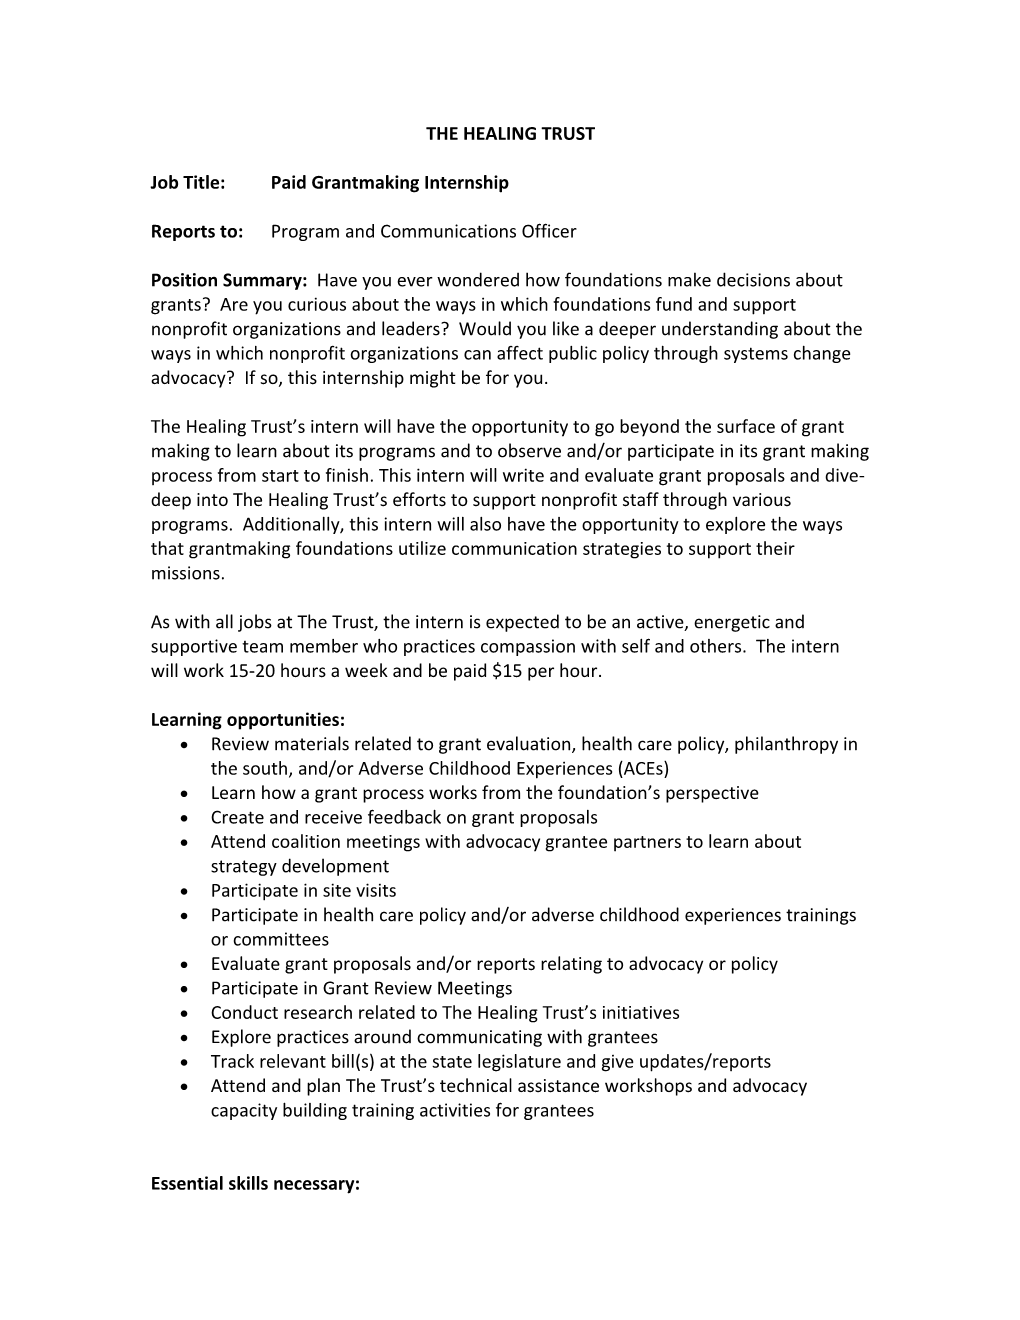 Job Title:Paid Grantmaking Internship